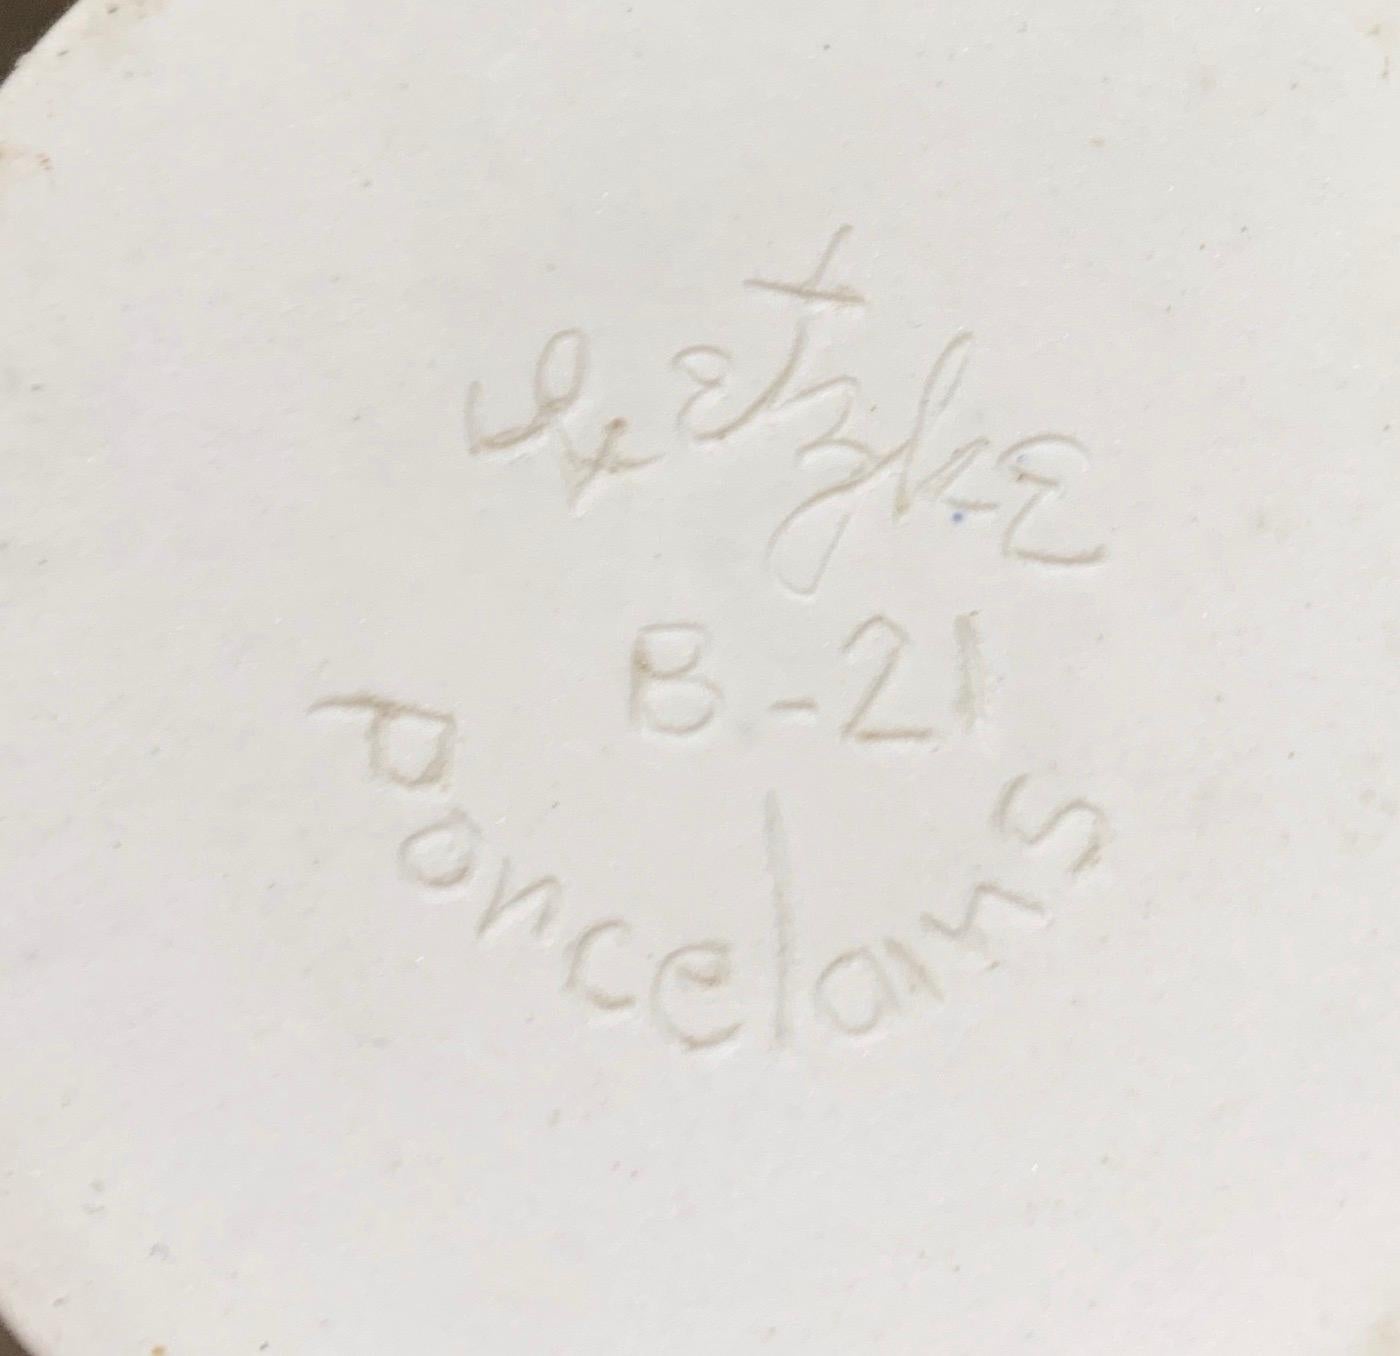 20th Century Lietzke Studio Porcelain Tableware Set, Midcentury Modern Art Pottery Ceramics